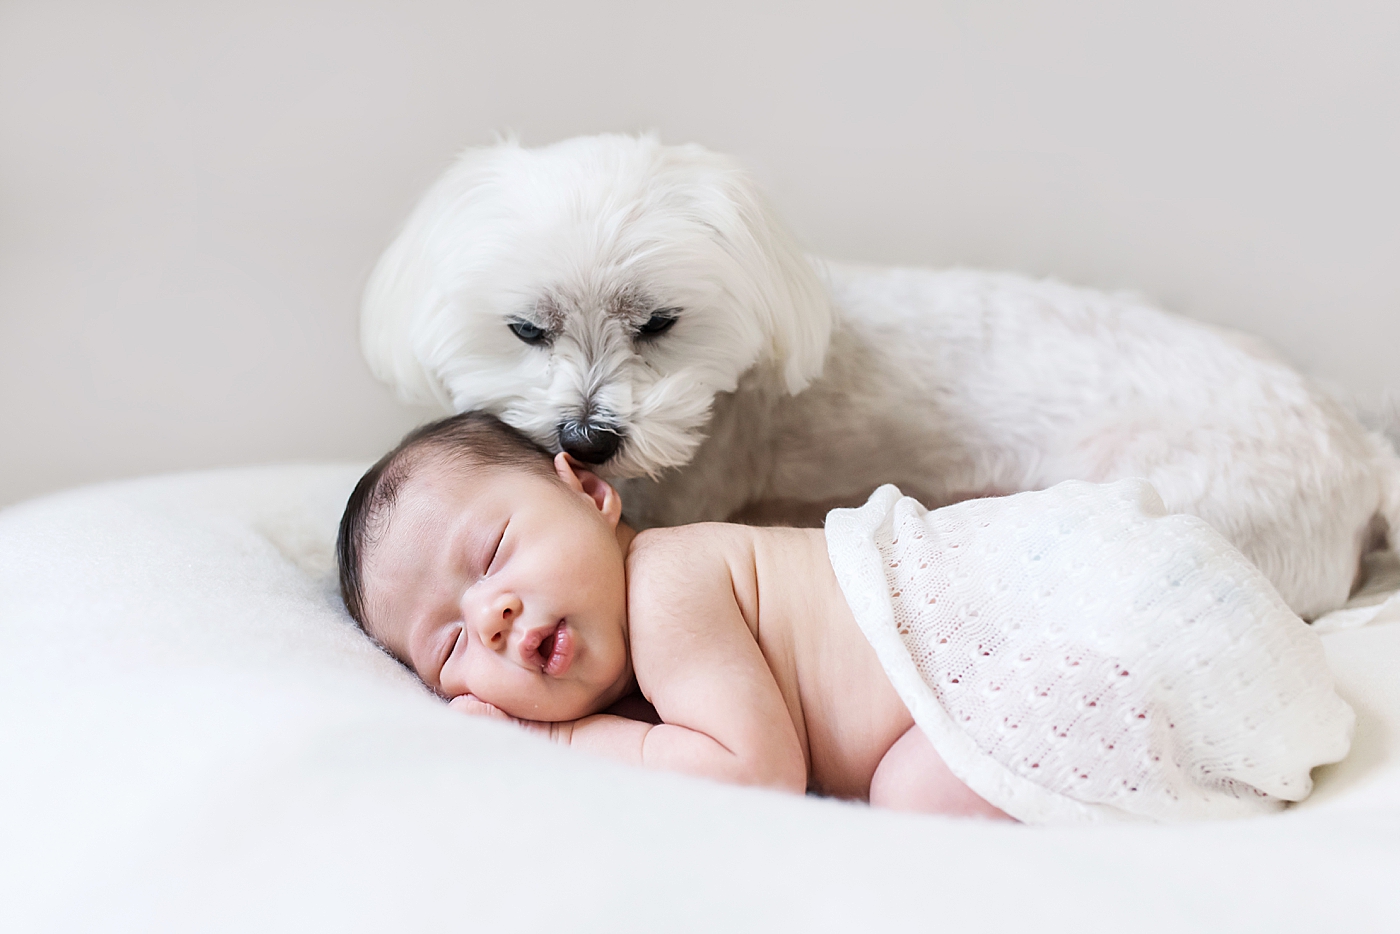 Newborn baby sleeping beside her fluffy white dog | Photo by Anna Wisjo Photography